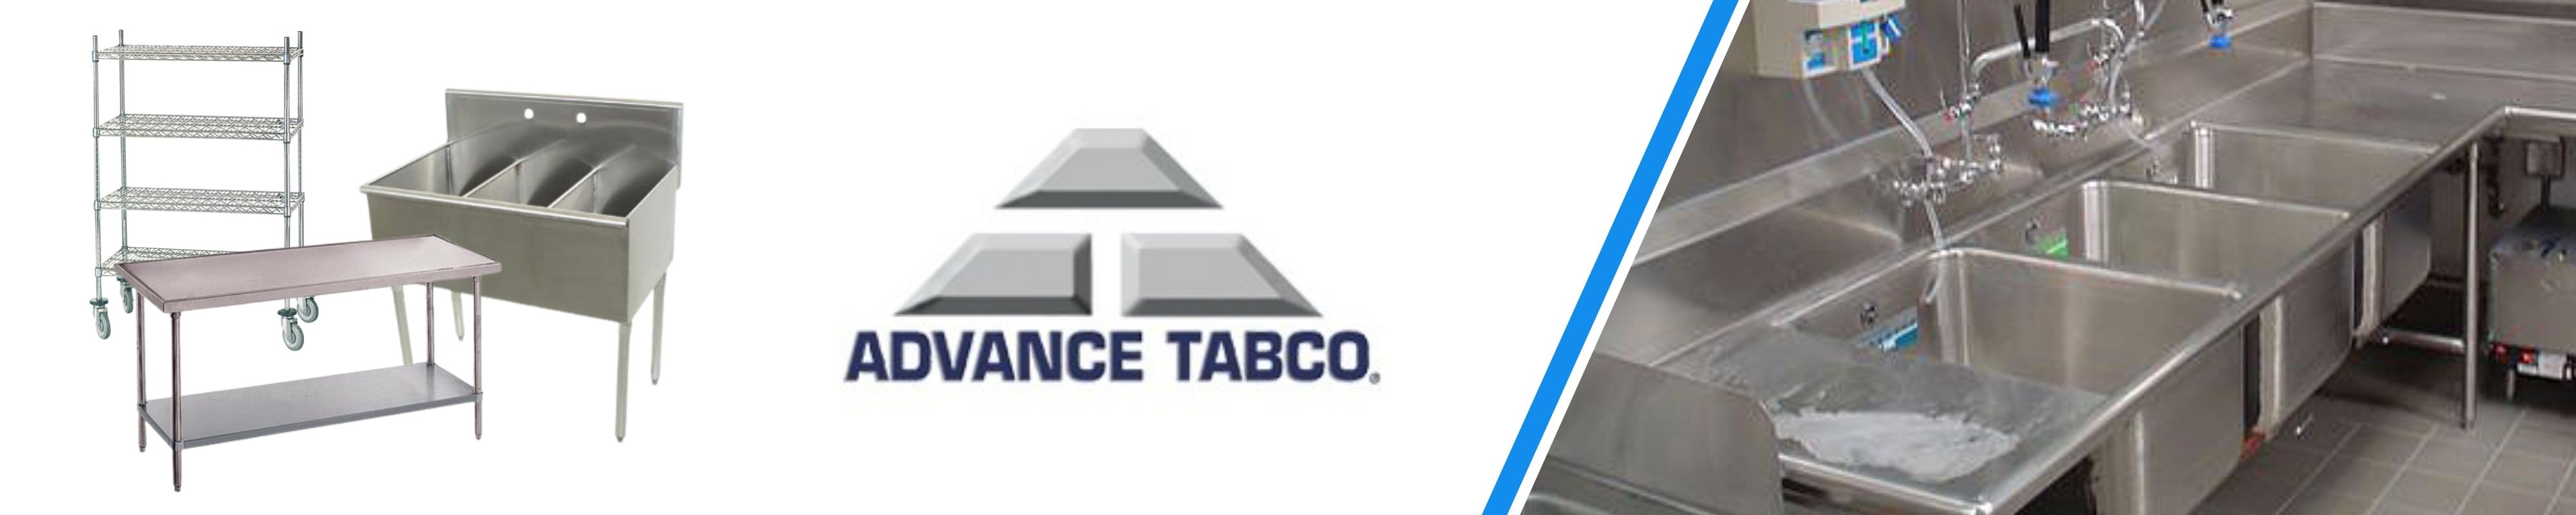 Advance Tabco